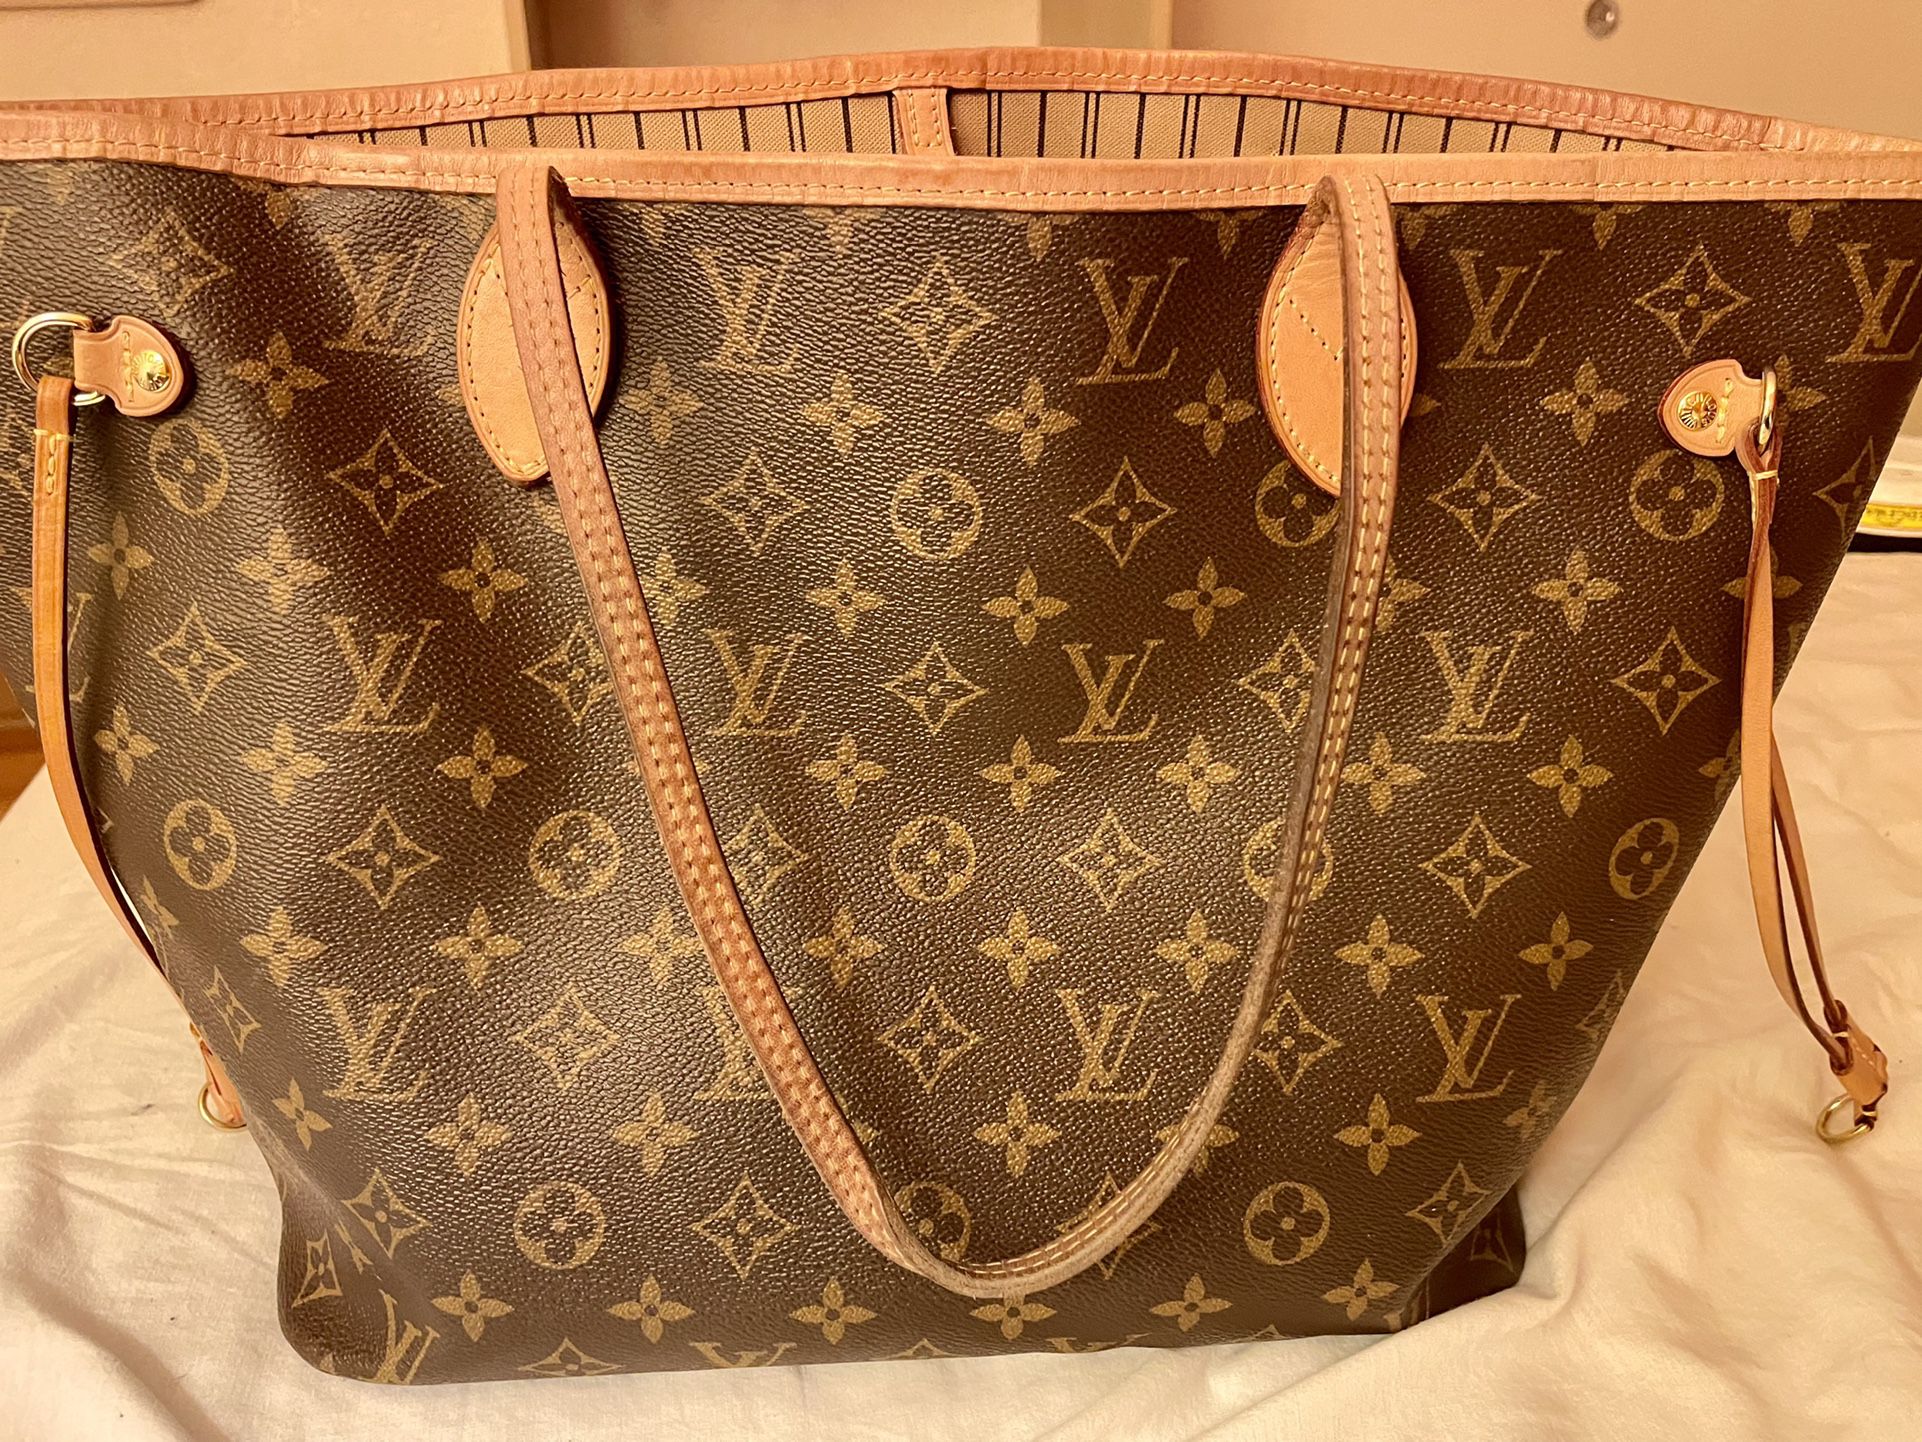 Louis Vuitton Neverfull MM Handbag for Sale in Bellevue, WA